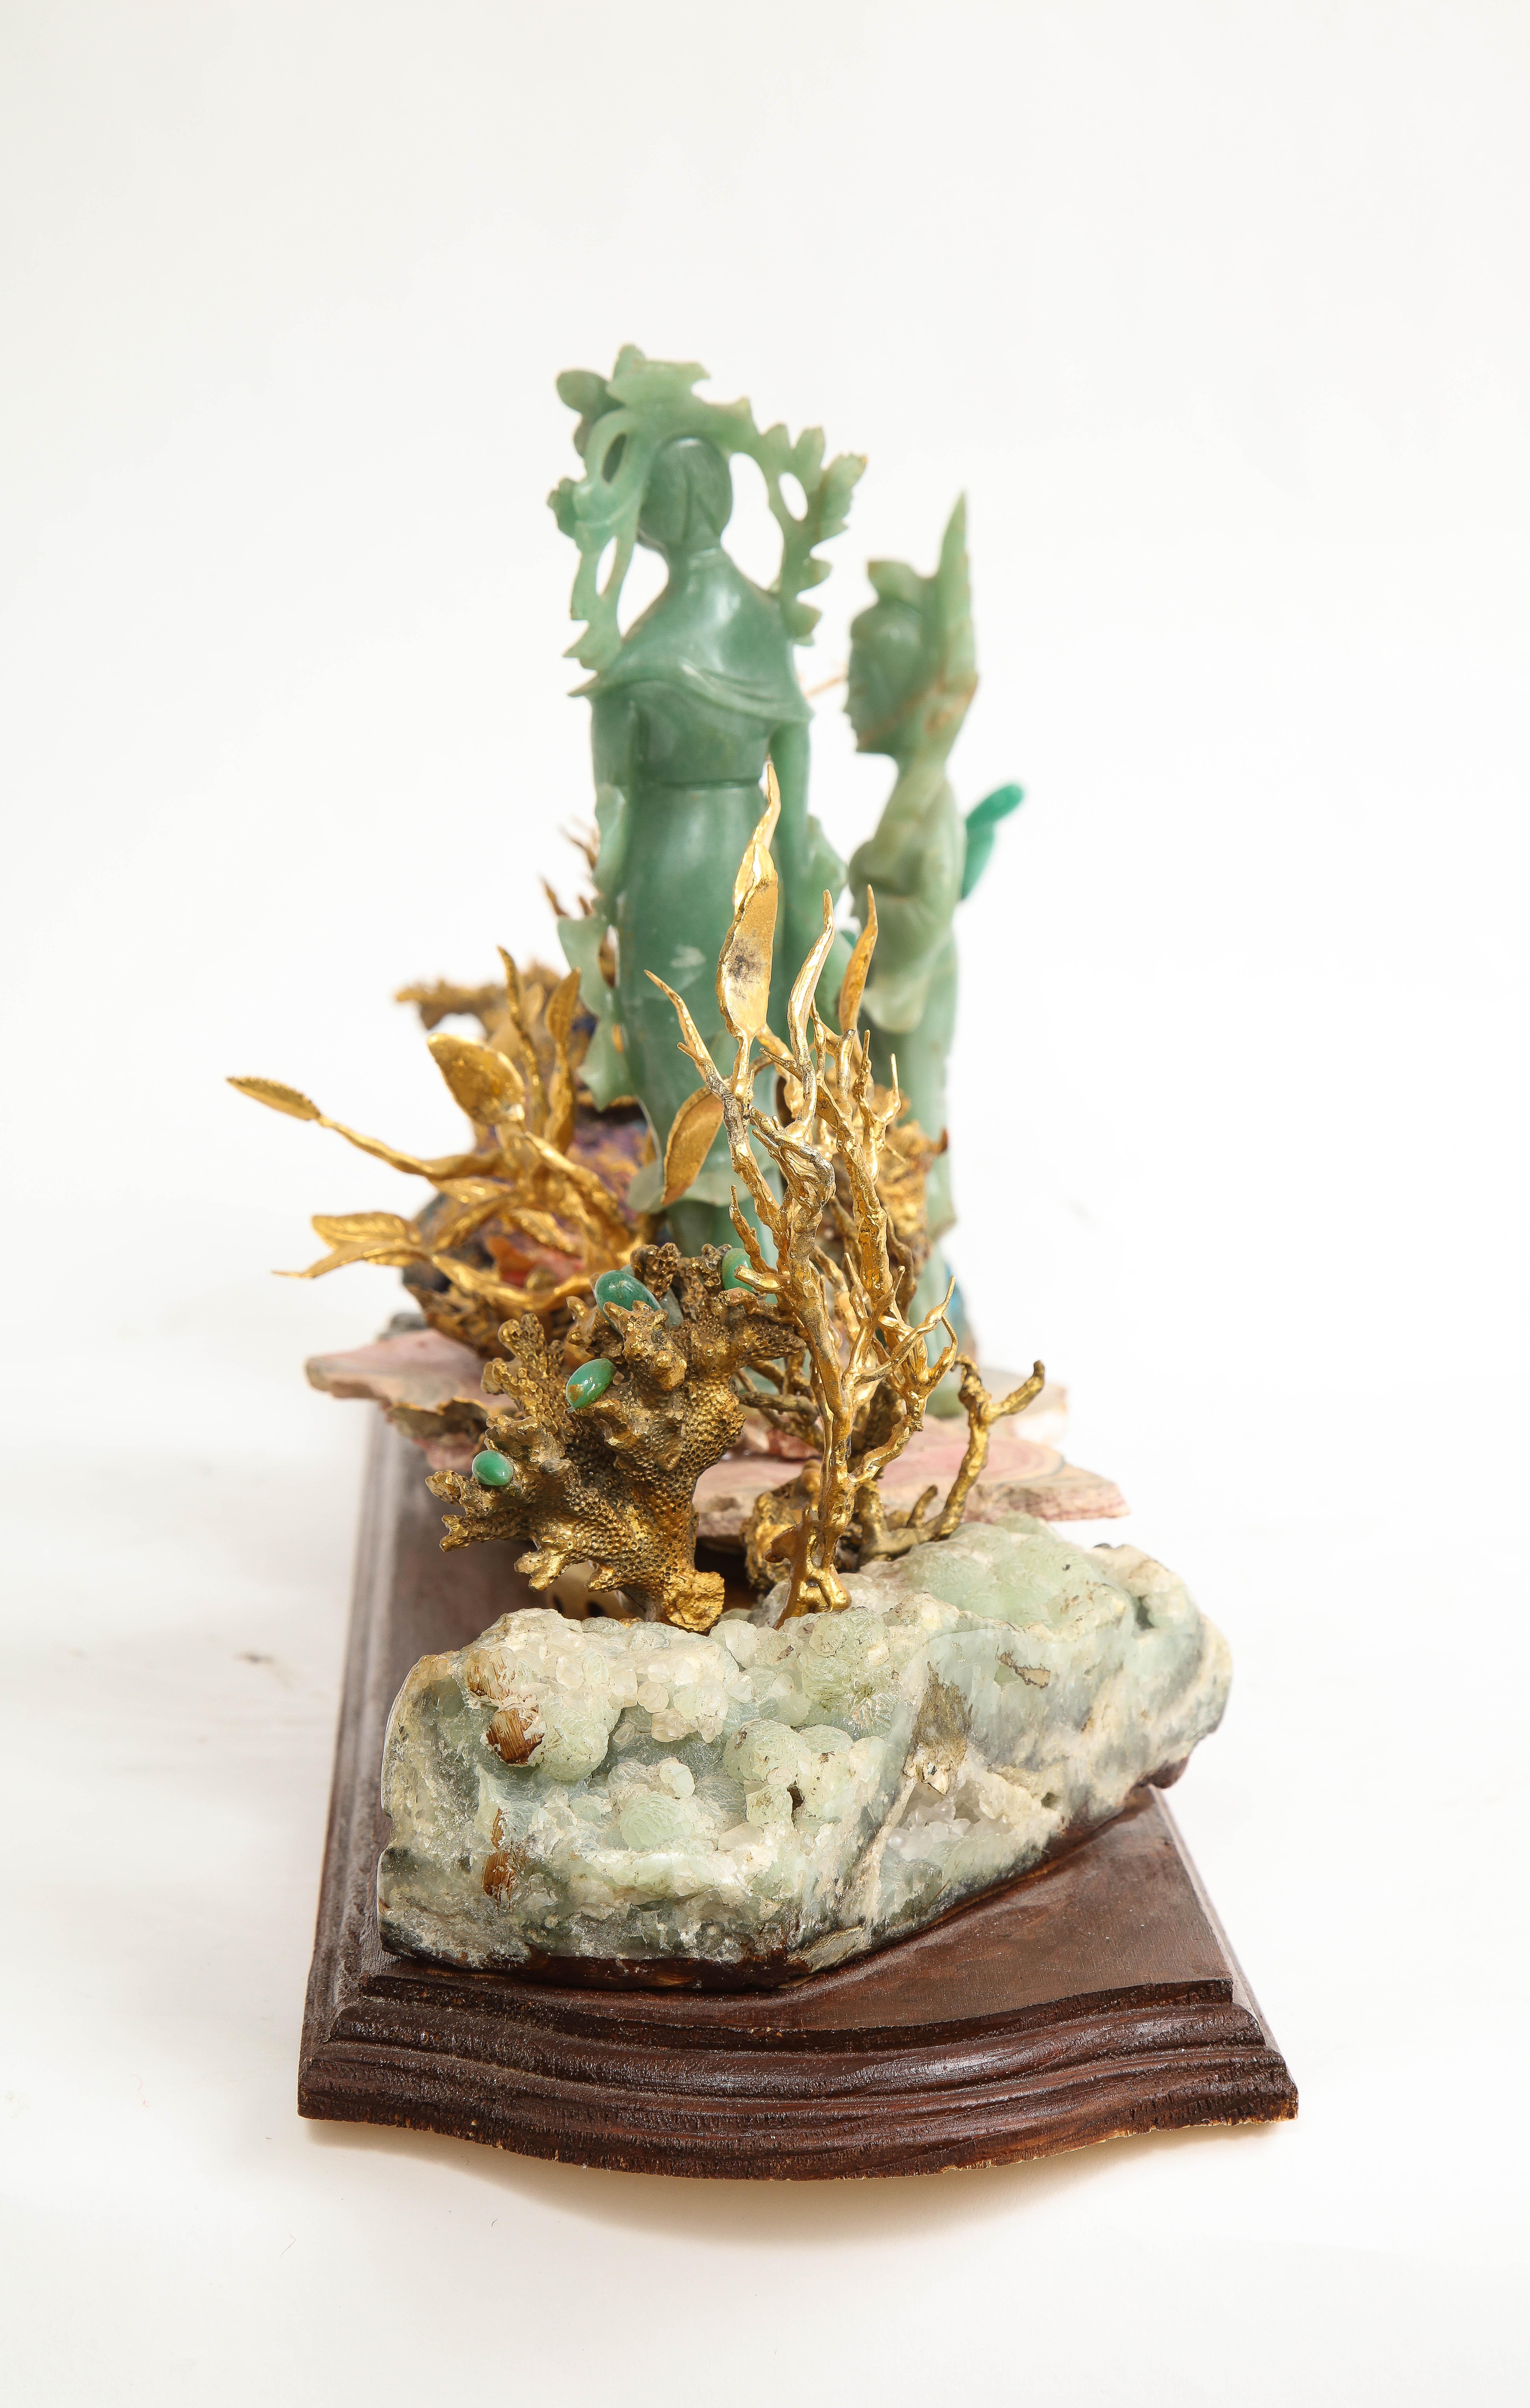 20th Century Chinese Jade, Cloisonné, & Gilt Metal Desk Accessory/Sculpture For Sale 8